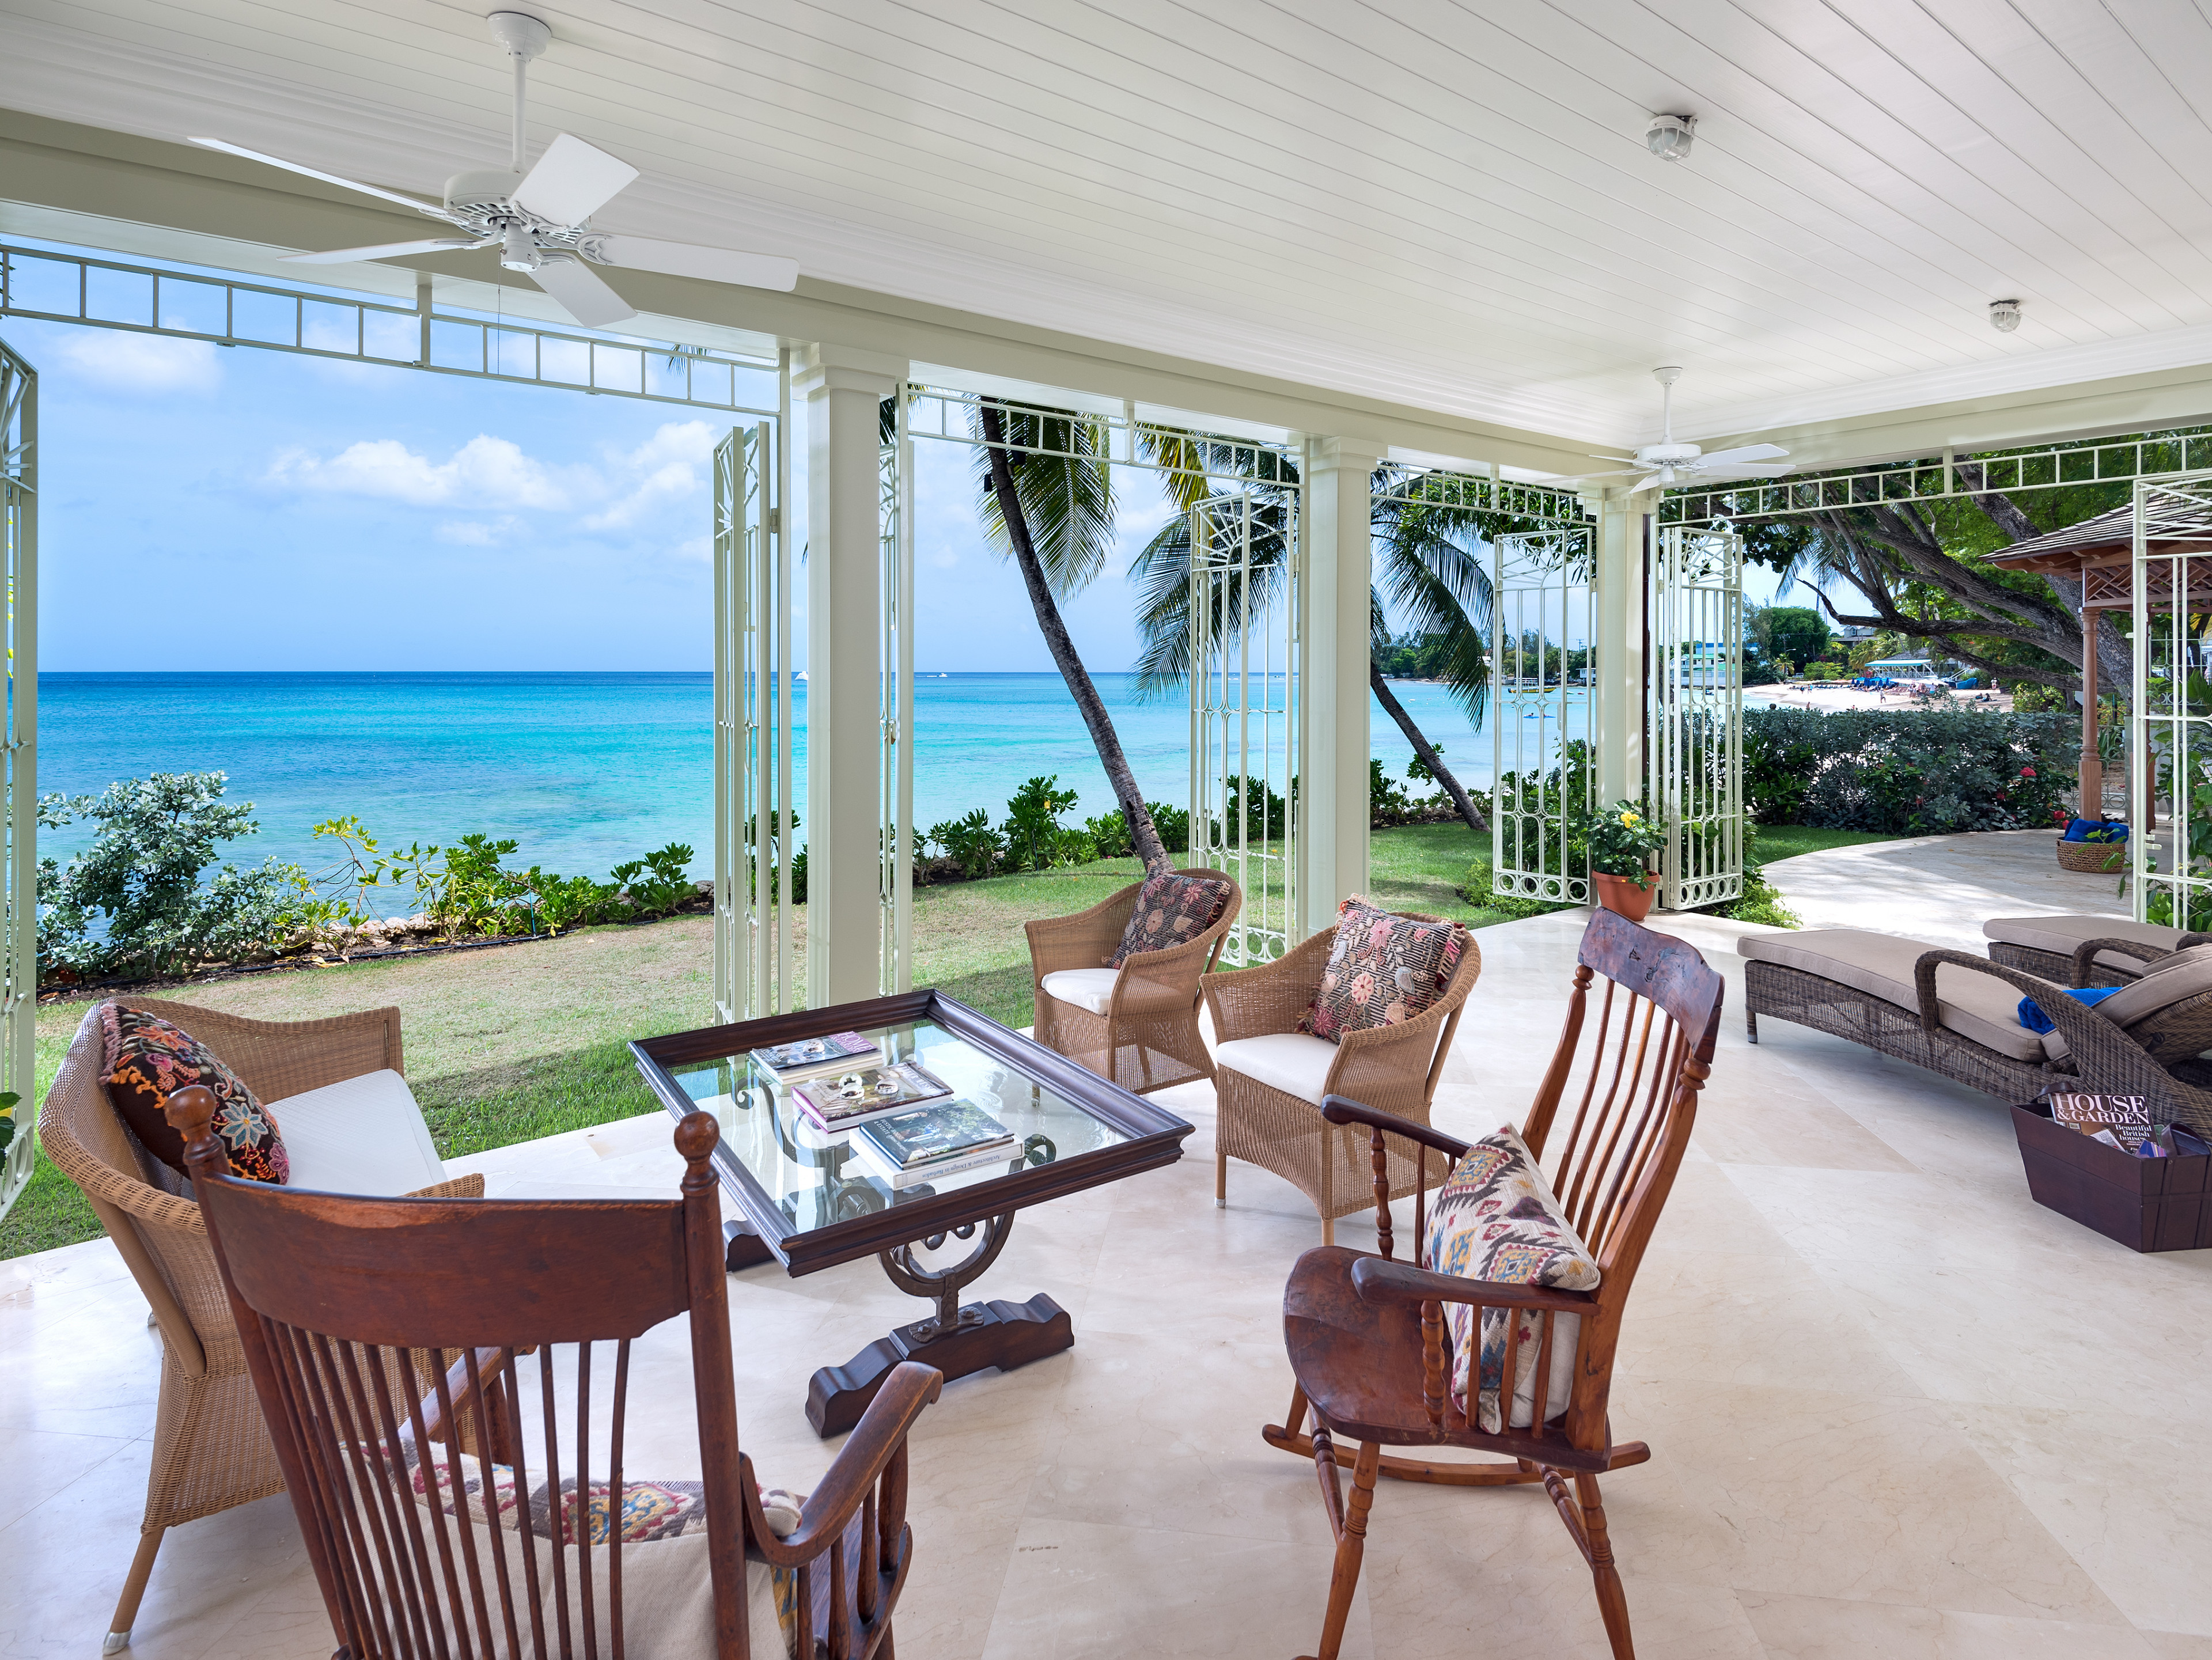 Hemingway House beachfront villas in St Peter, Barbados